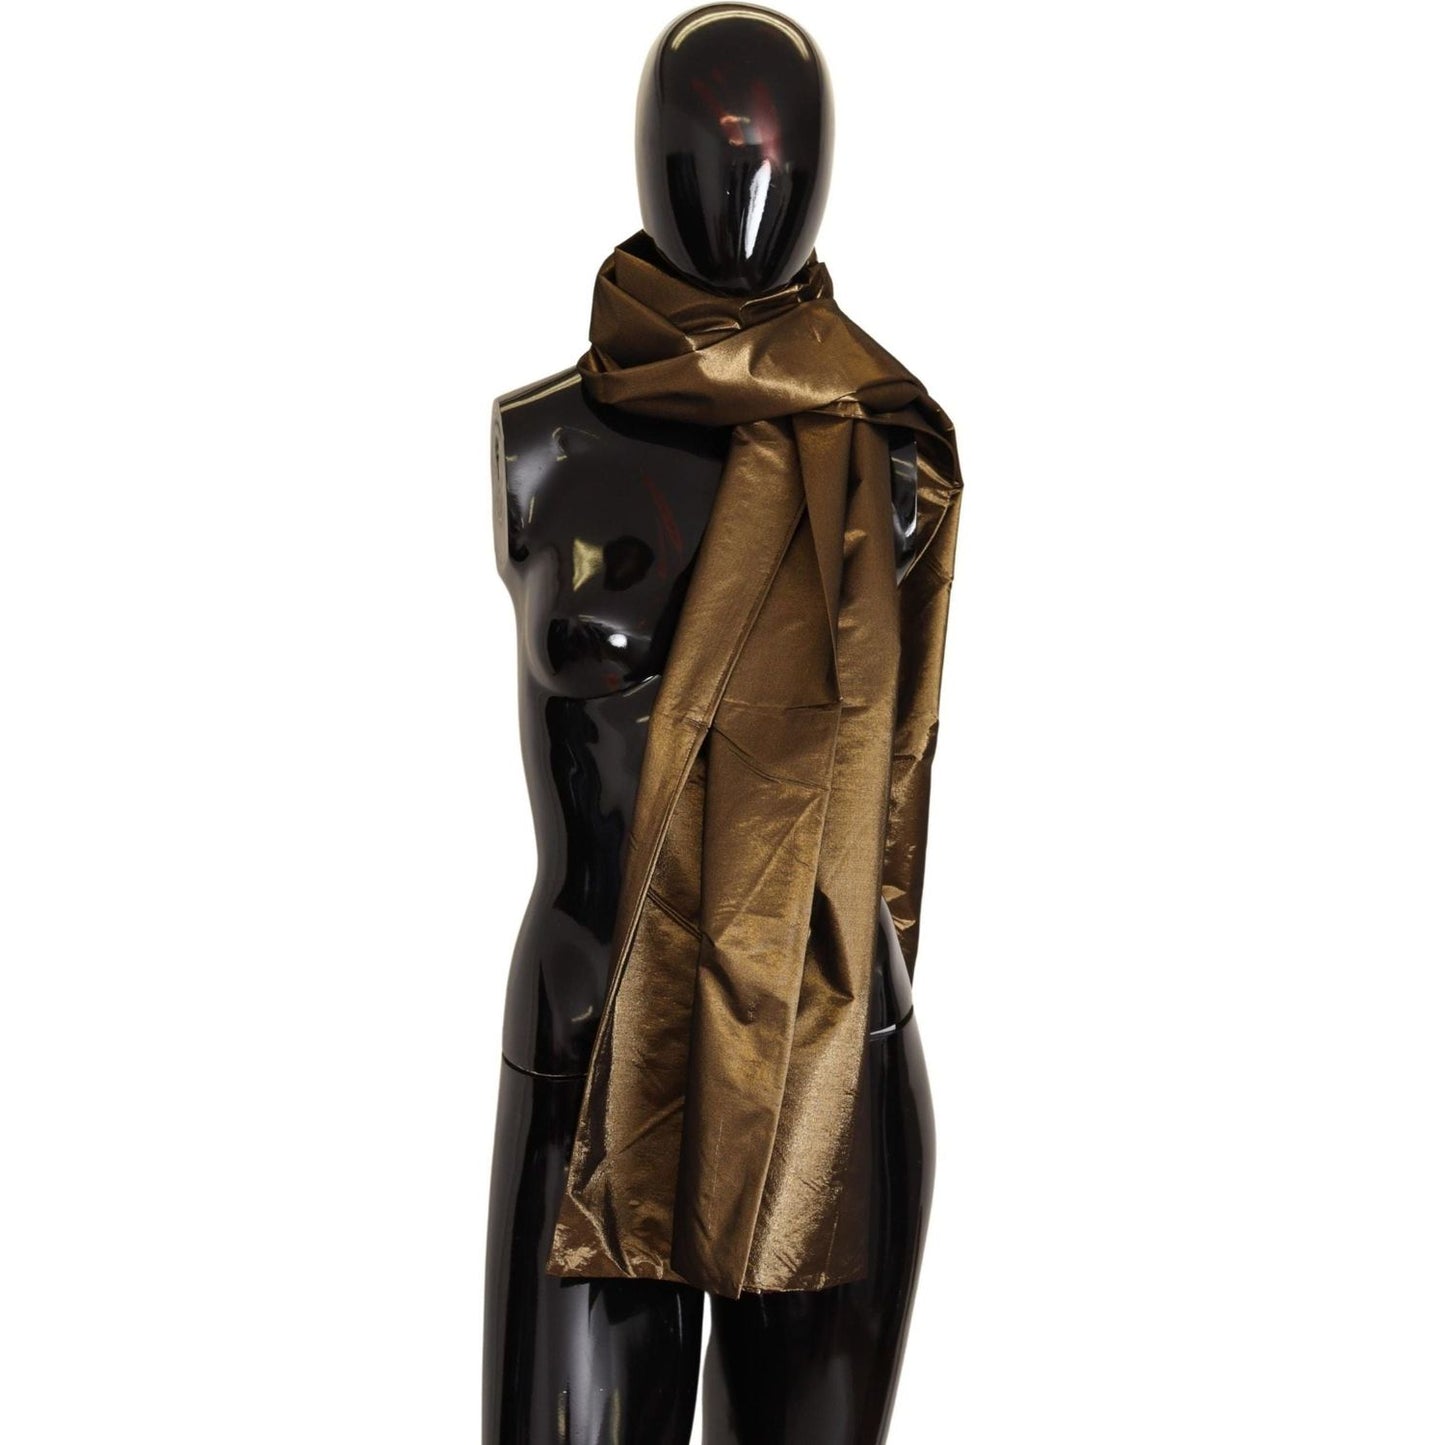 Dolce & Gabbana | Gold Blend Shawl Wrap Metallic Bronze Scarf | 209.00 - McRichard Designer Brands